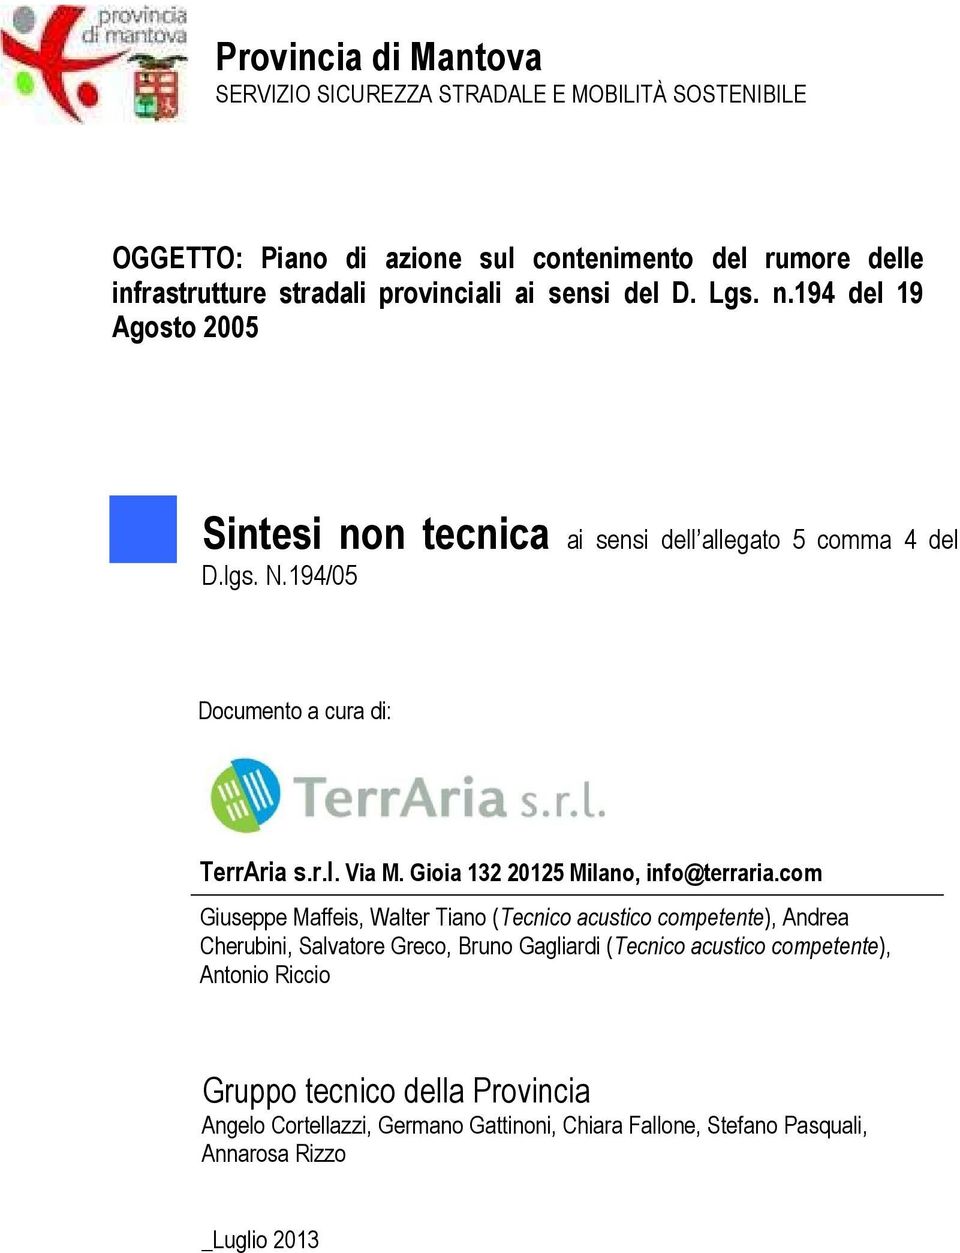 Gioia 132 20125 Milano, info@terraria.